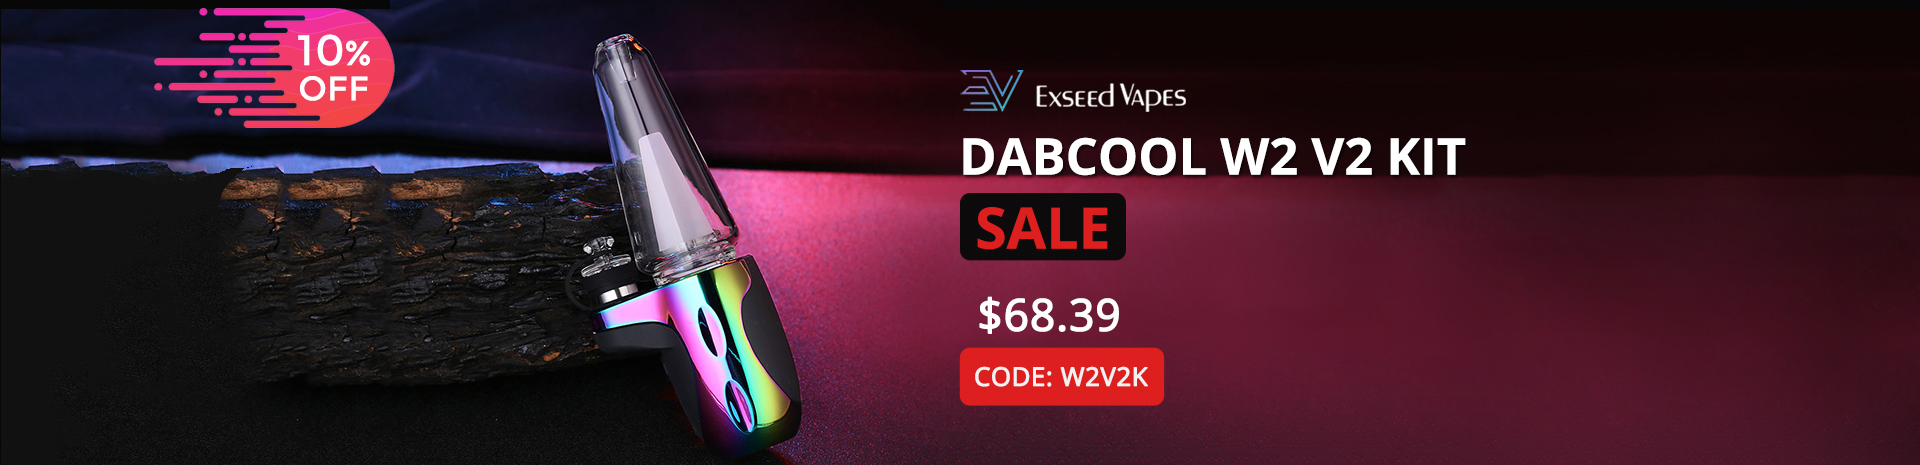 Exseed Vape Dabcool W2 V2 Kit Sale